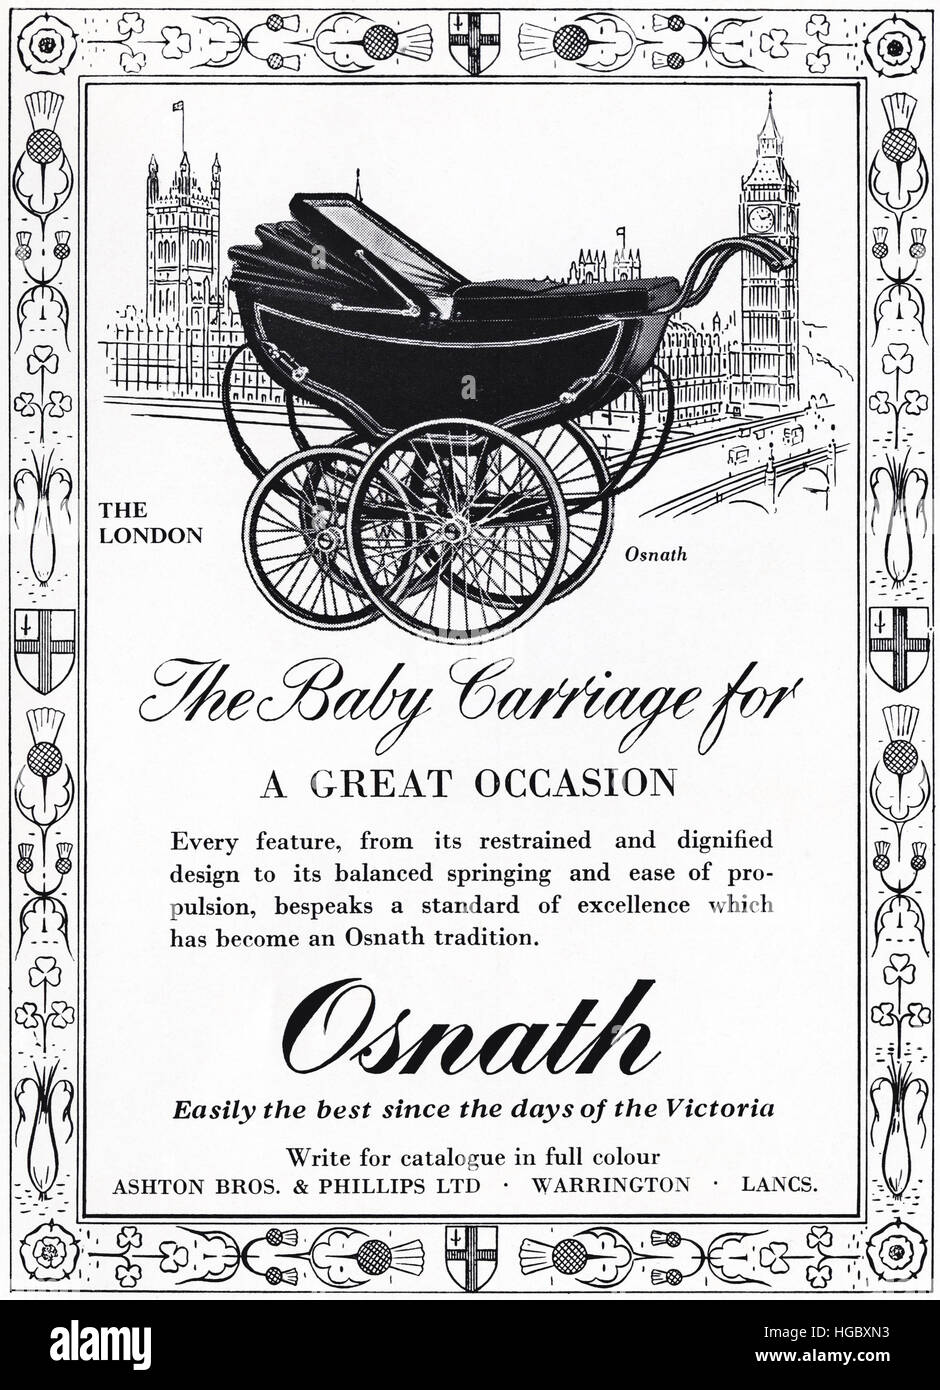 osnath prams history